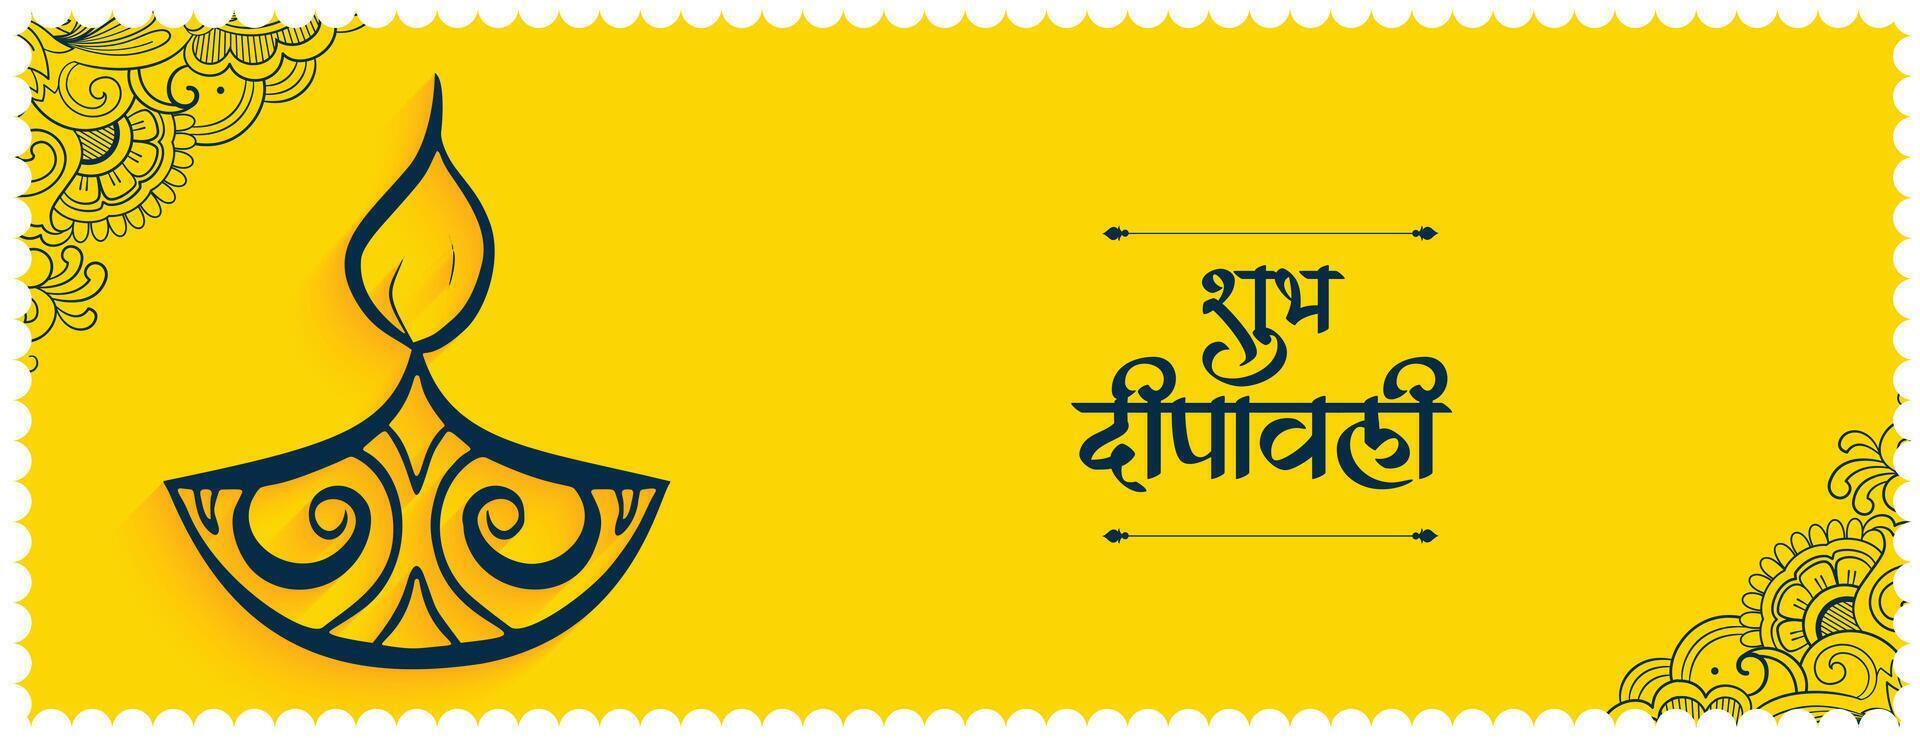 shubh Deepavali giallo bandiera con etnico diya design vettore